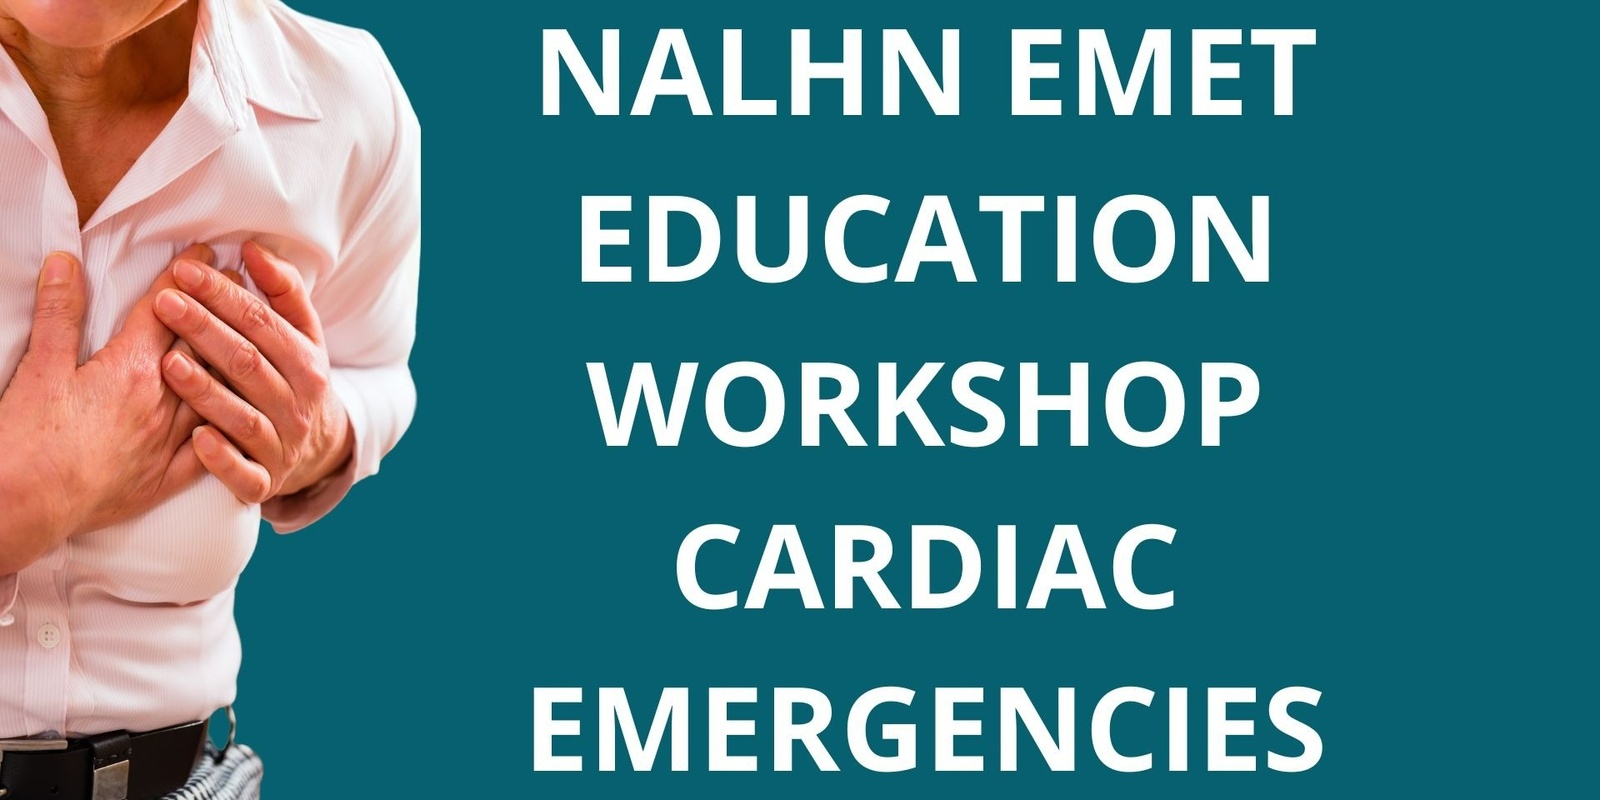 Banner image for NALHN/BHFLHN EMET Evening - Cardiac Emergencies  